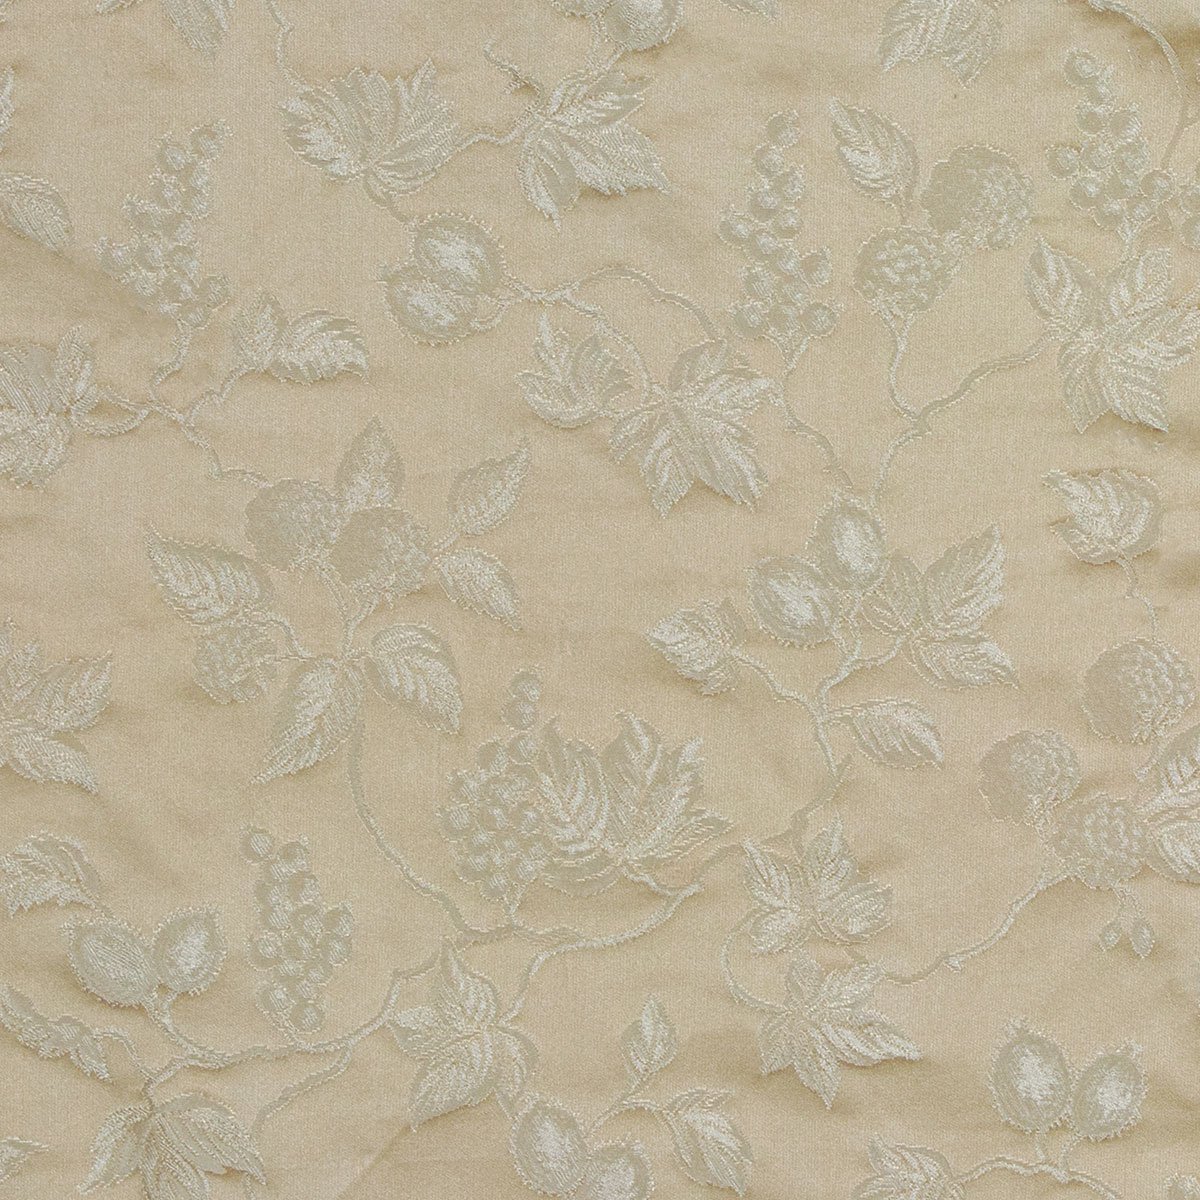 RK Classics Nora Silk Jacquard Cream Fabric | OnlineFabricStore